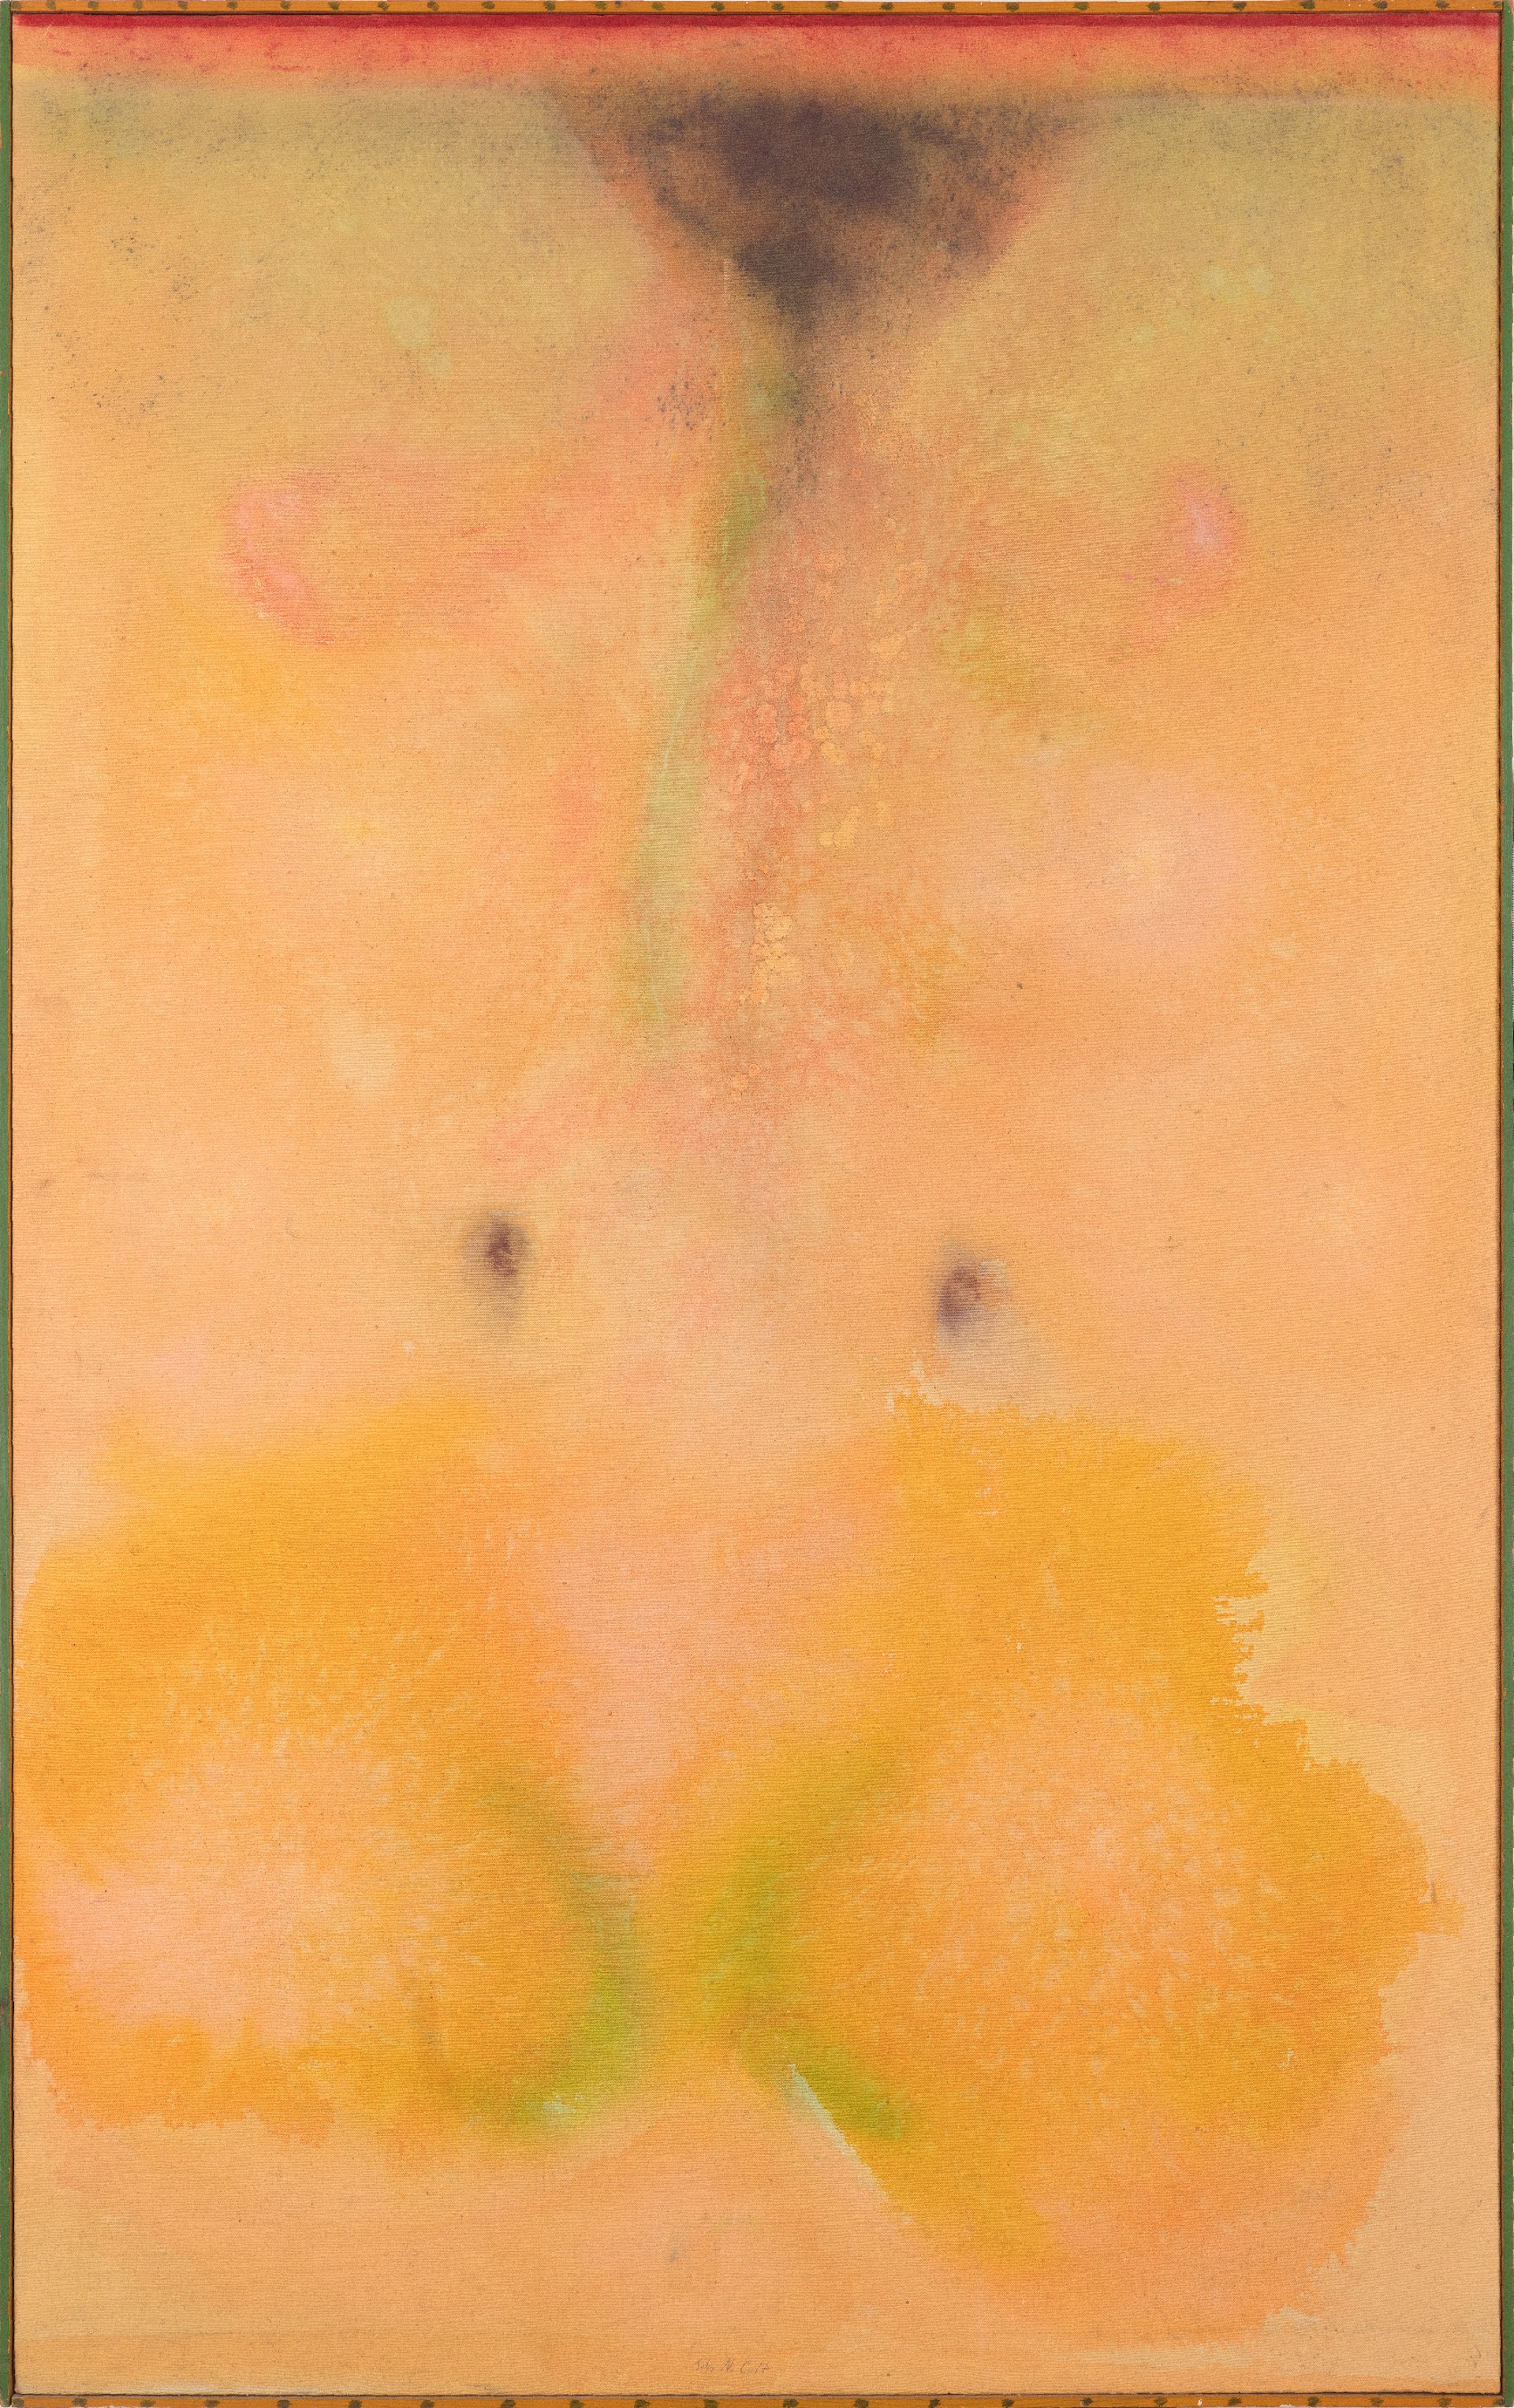 Peach Stoned by John N. Colt